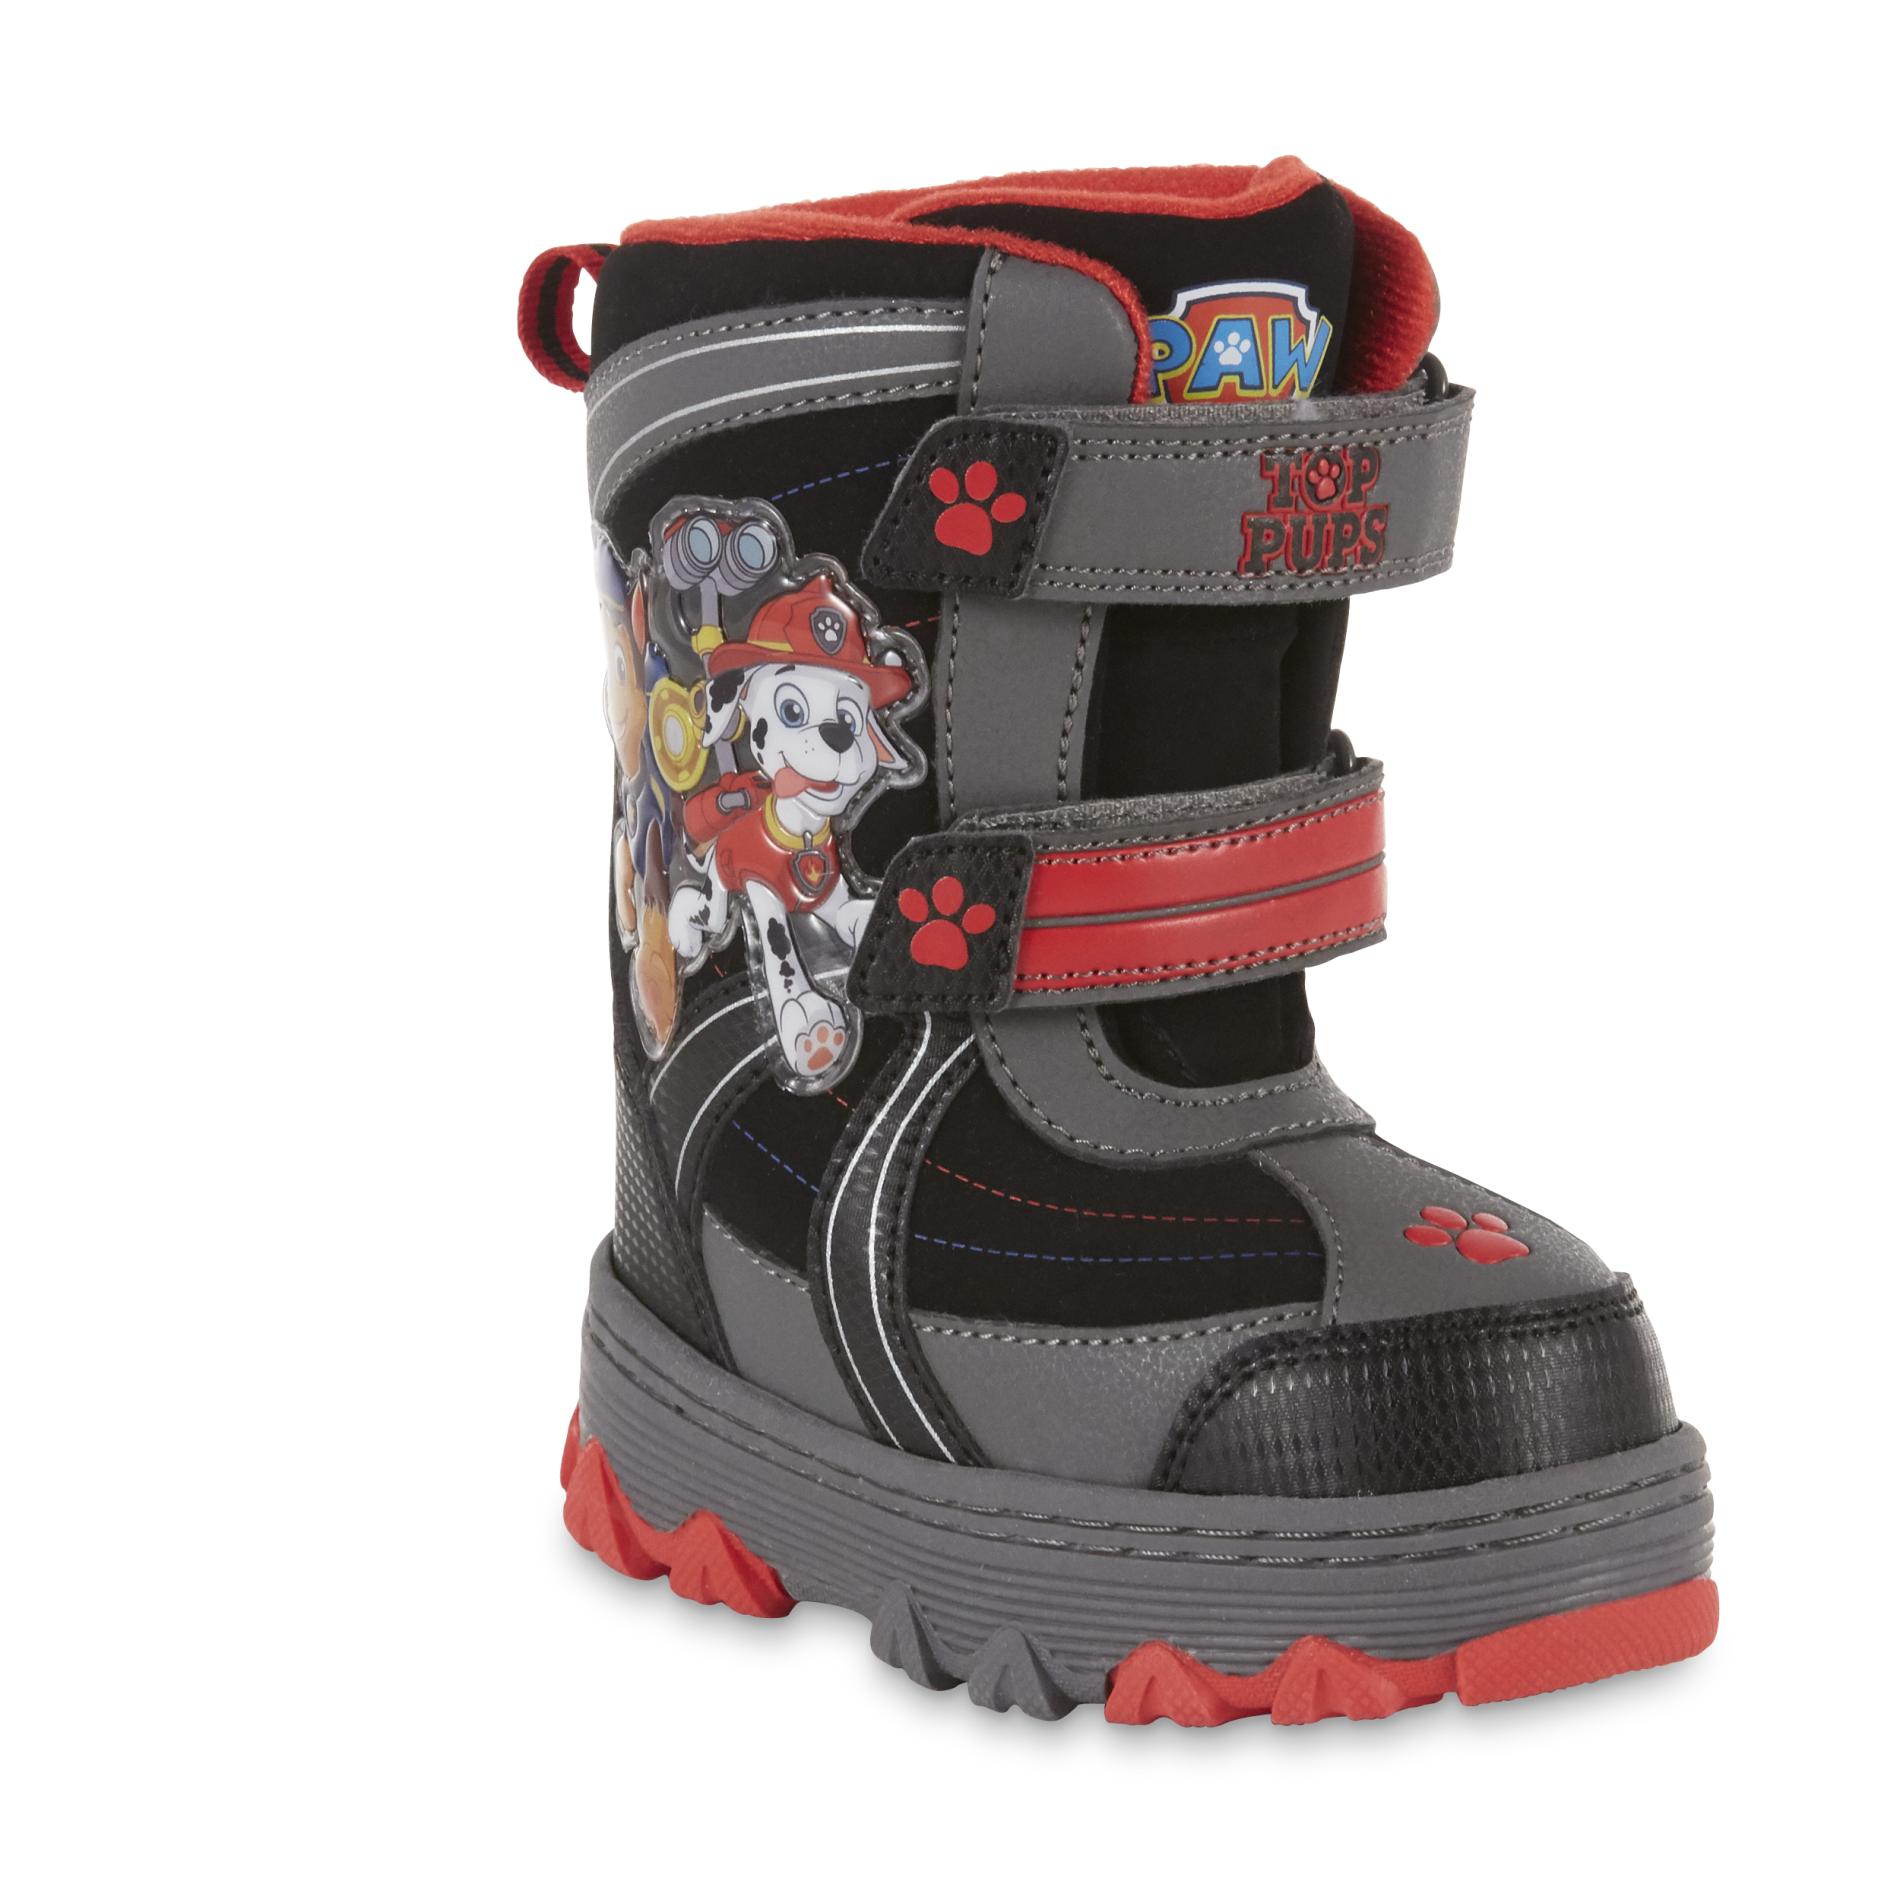 Nickelodeon Toddler Boys' PAW Patrol Gray/Black/Red Weather Boot